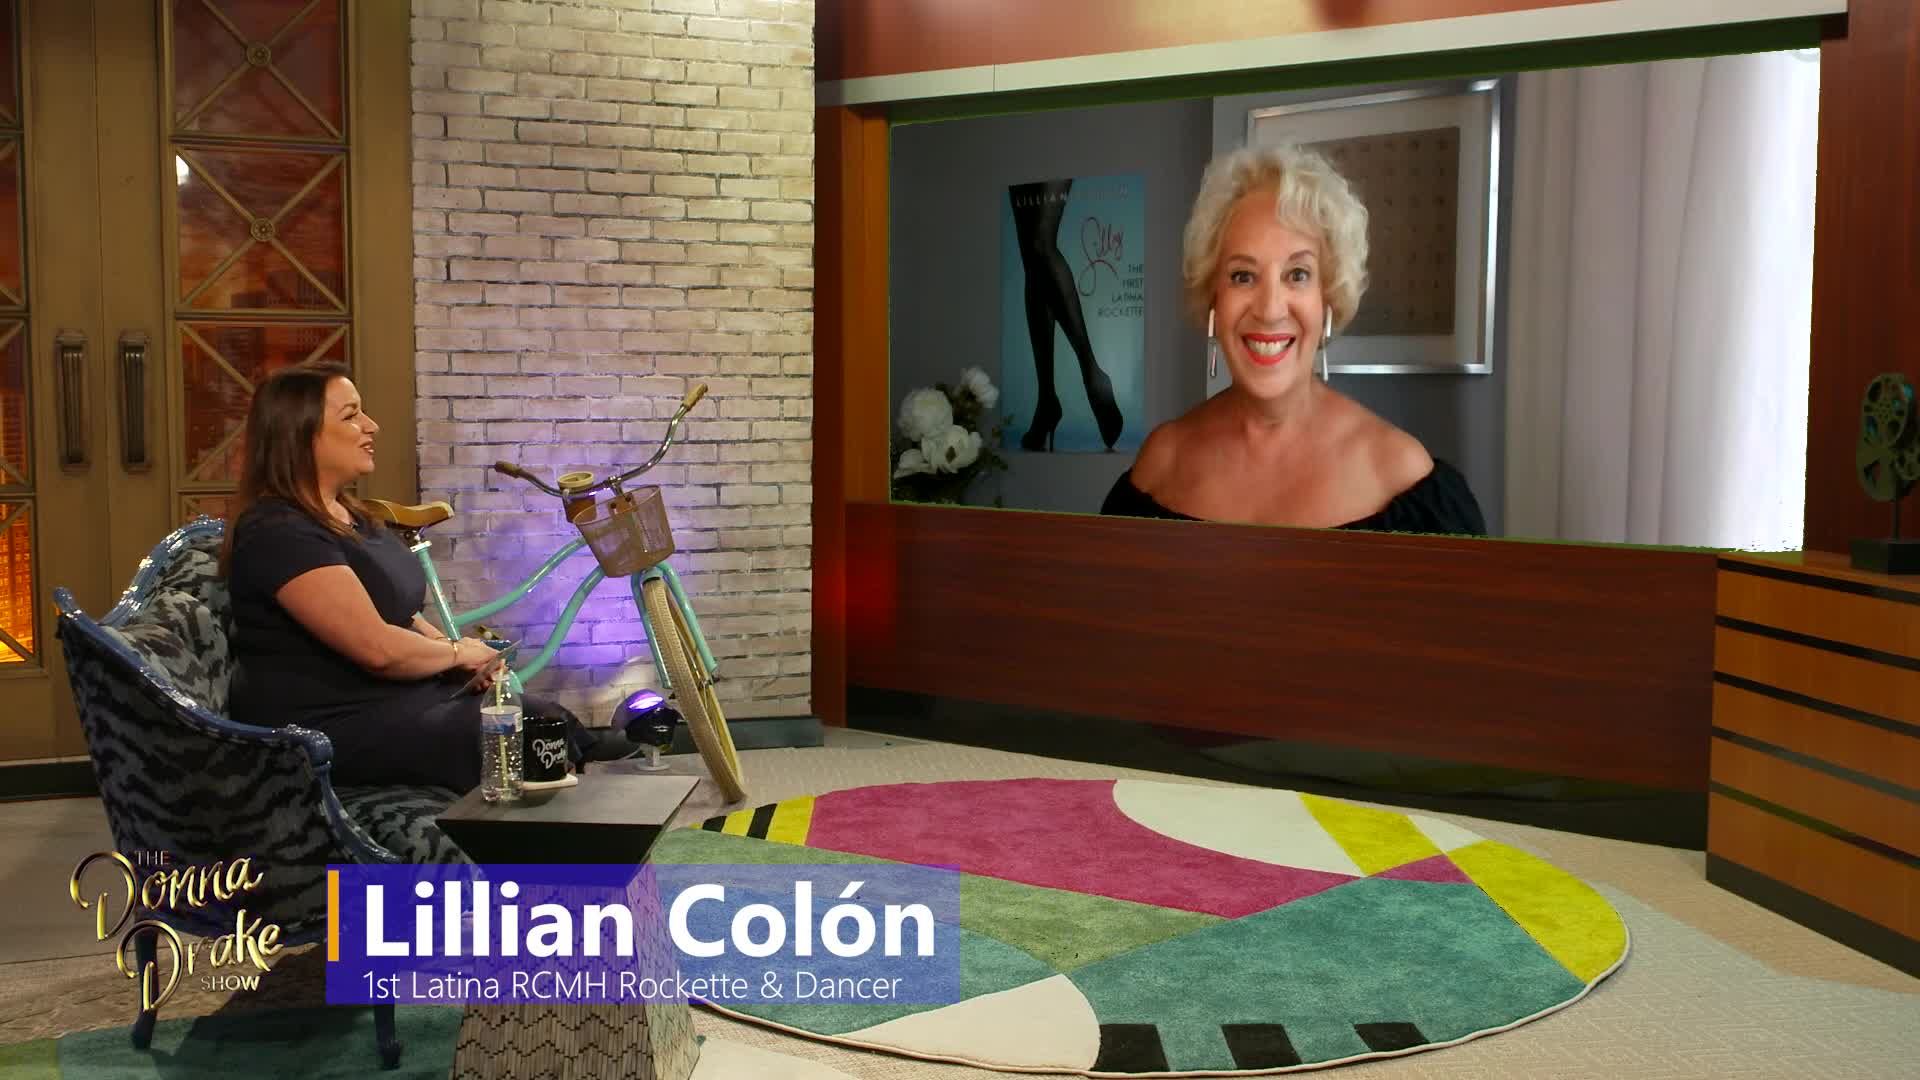 The Donna Drake Show Welcomes Lillian Colón